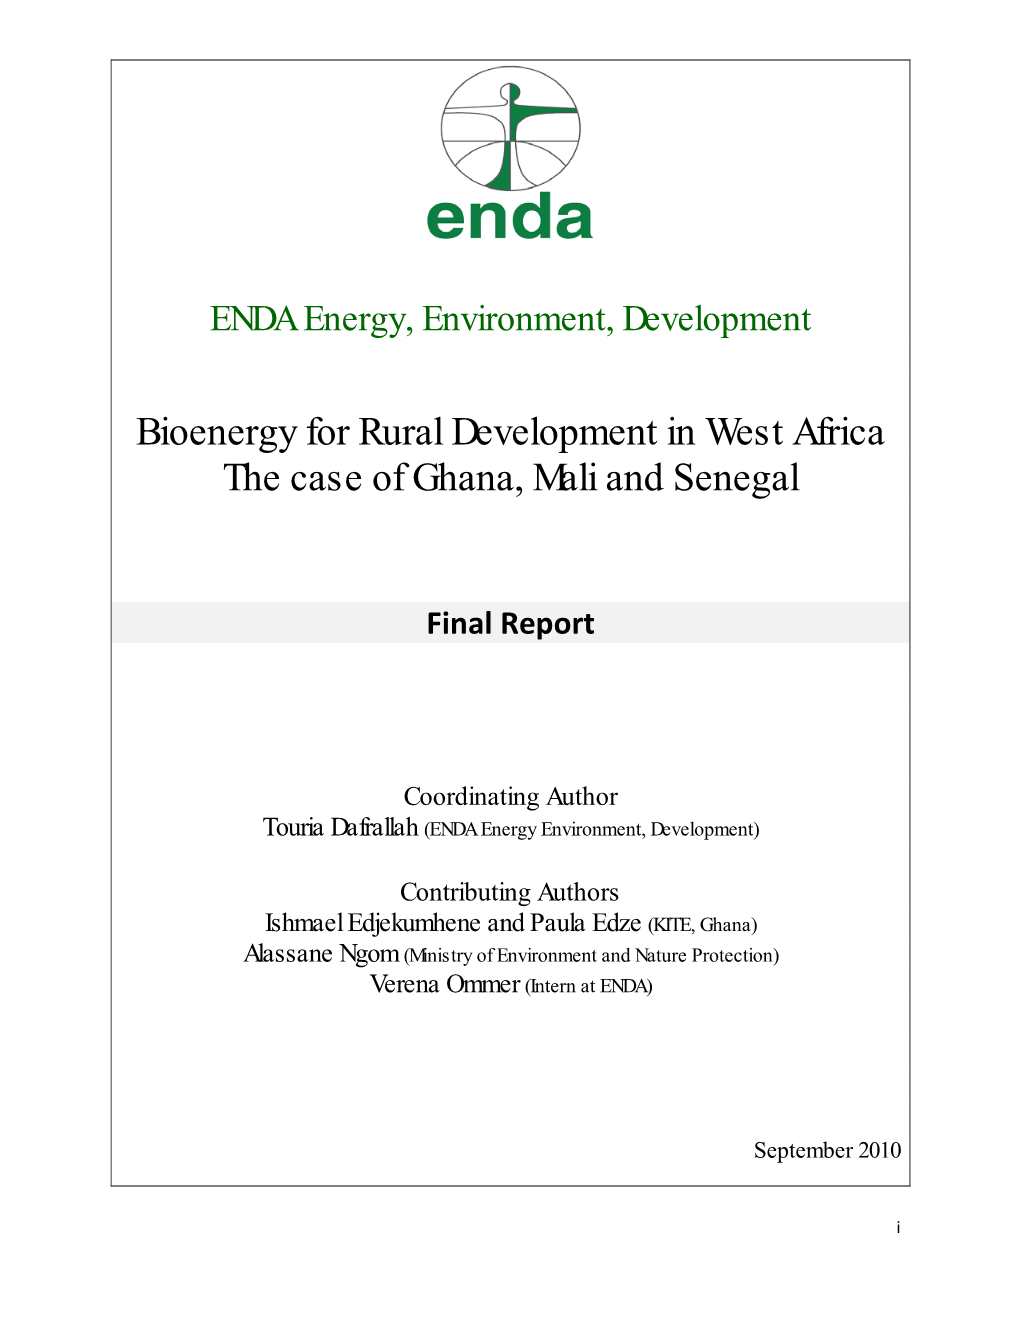 Bioenergy for Rural Development in West Africa the Case of Ghana, Mali and Senegal